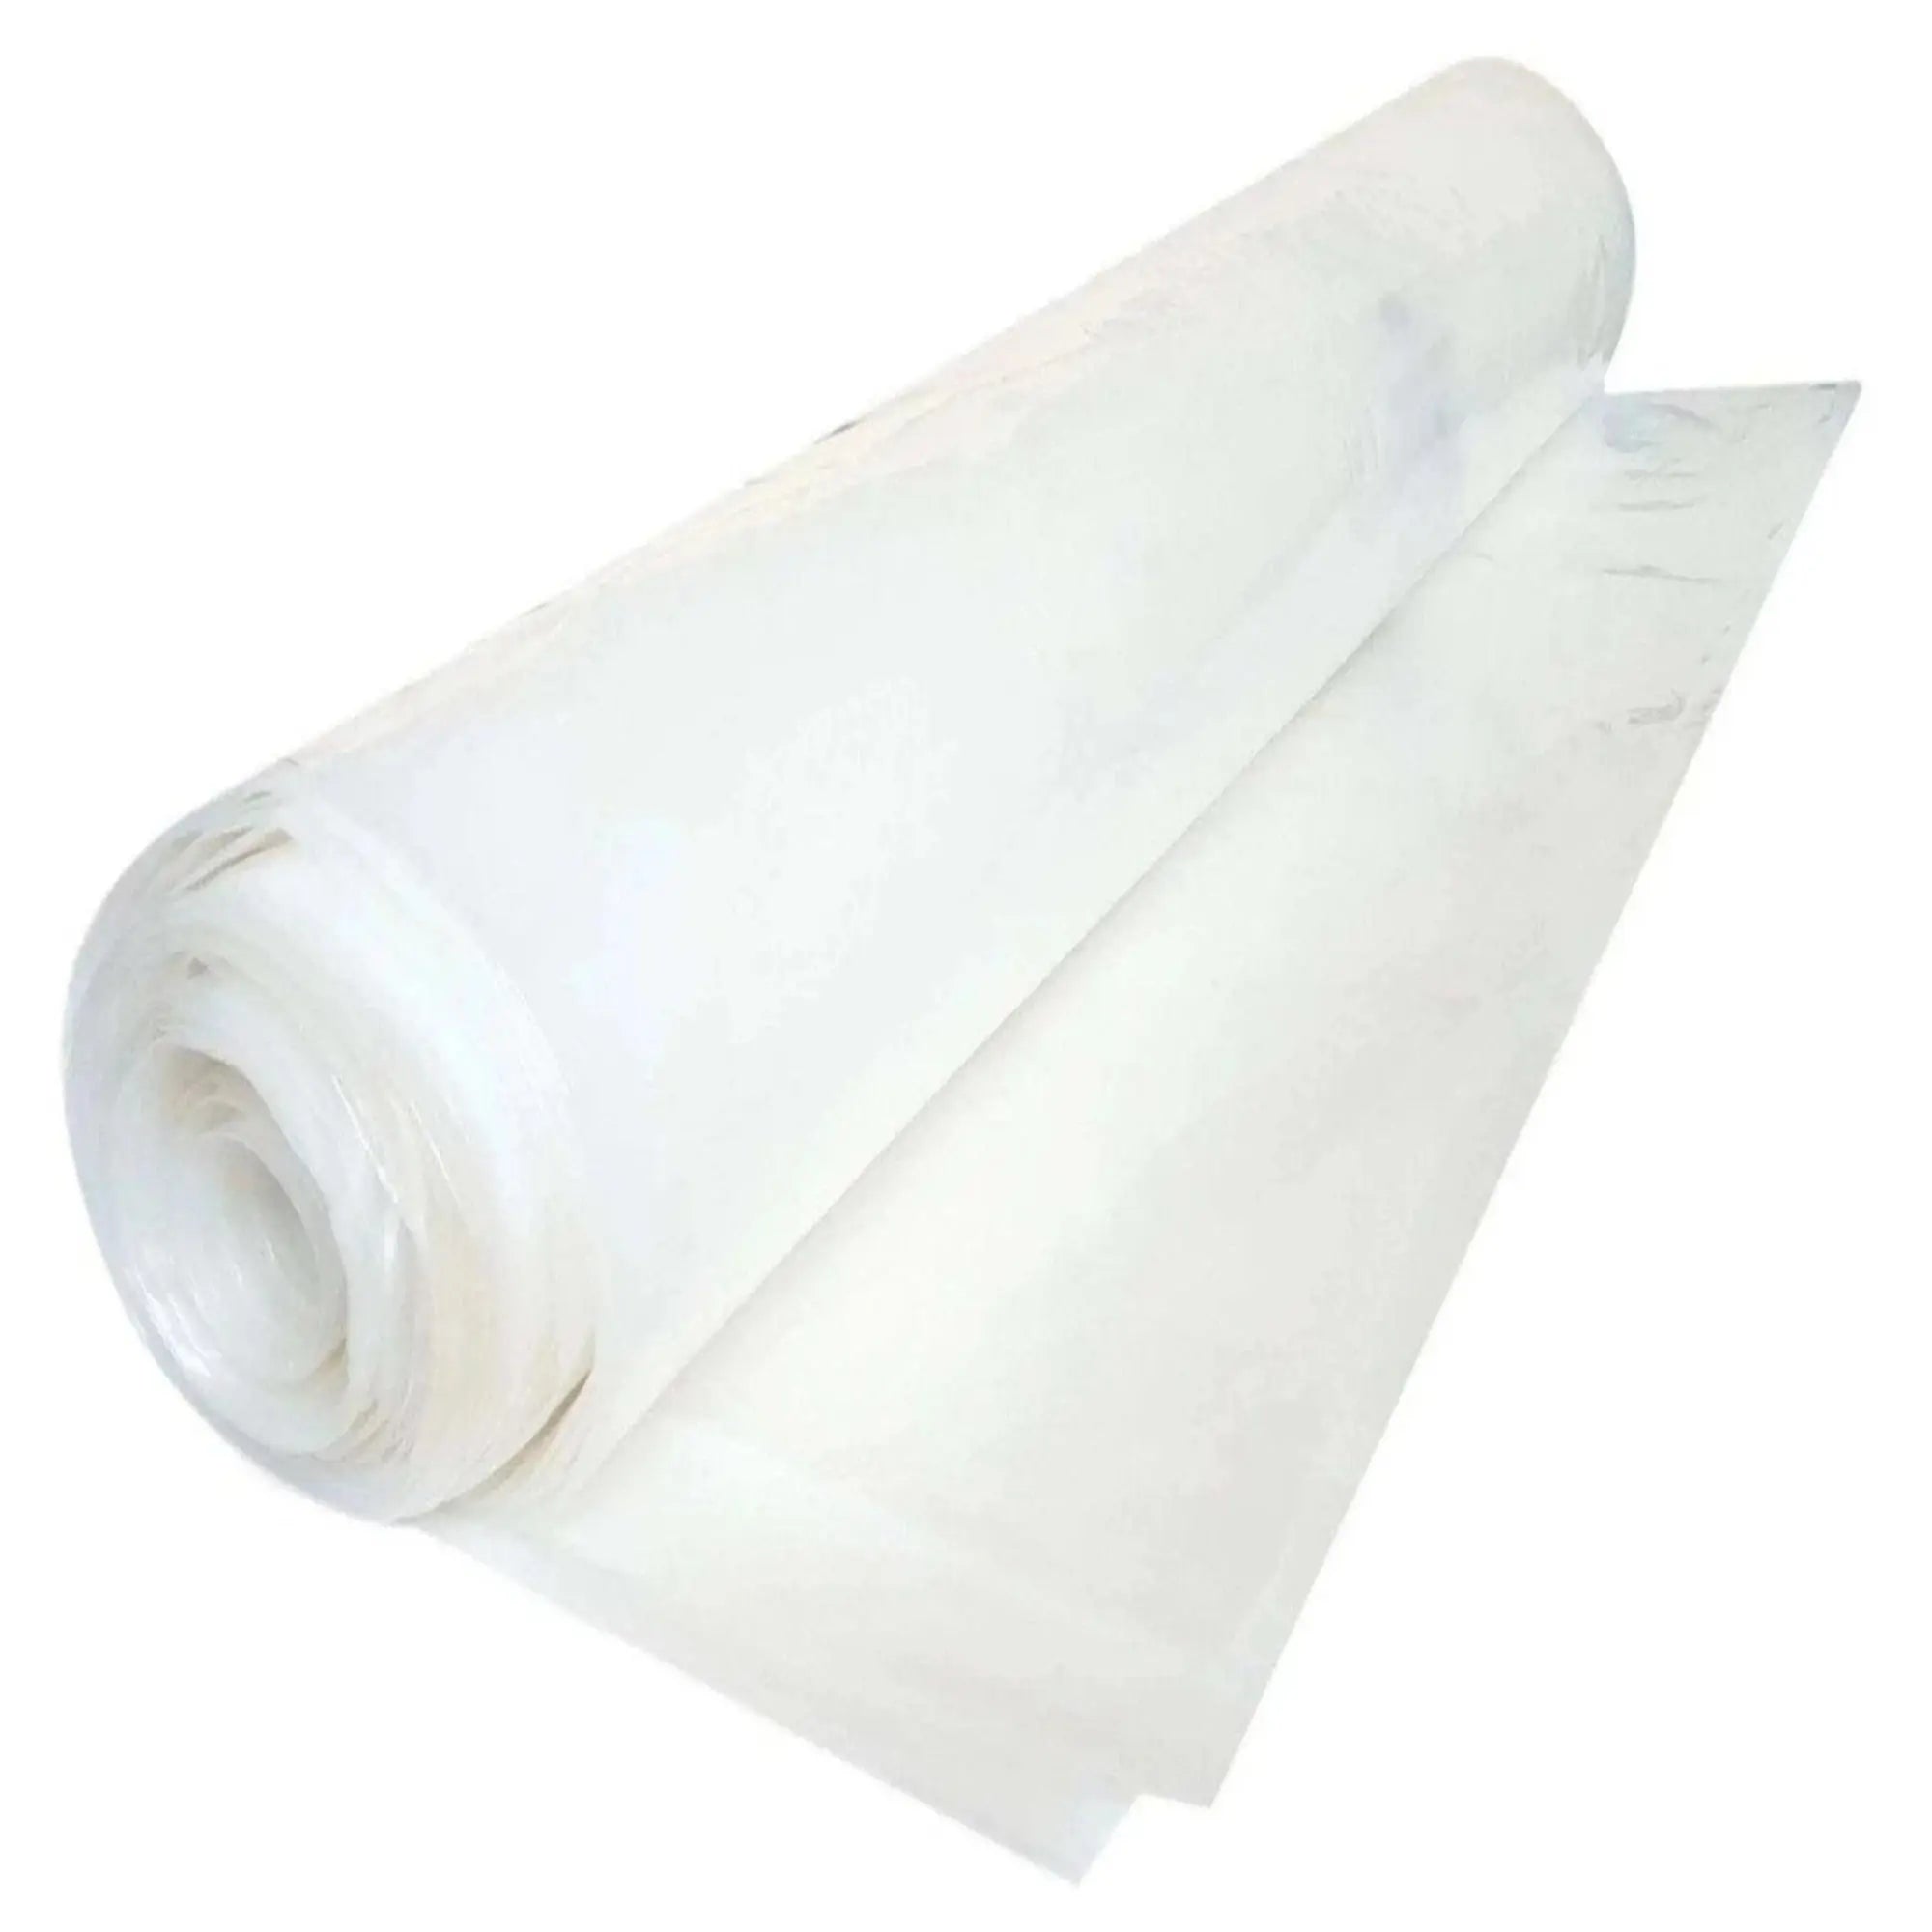 Buy Wholesale China Transparent Pvc Plastic Sheet,clear Plastic Sheet, flexible Clear Plastic & Transparent Pvc Plastic Sheet at USD 1.56